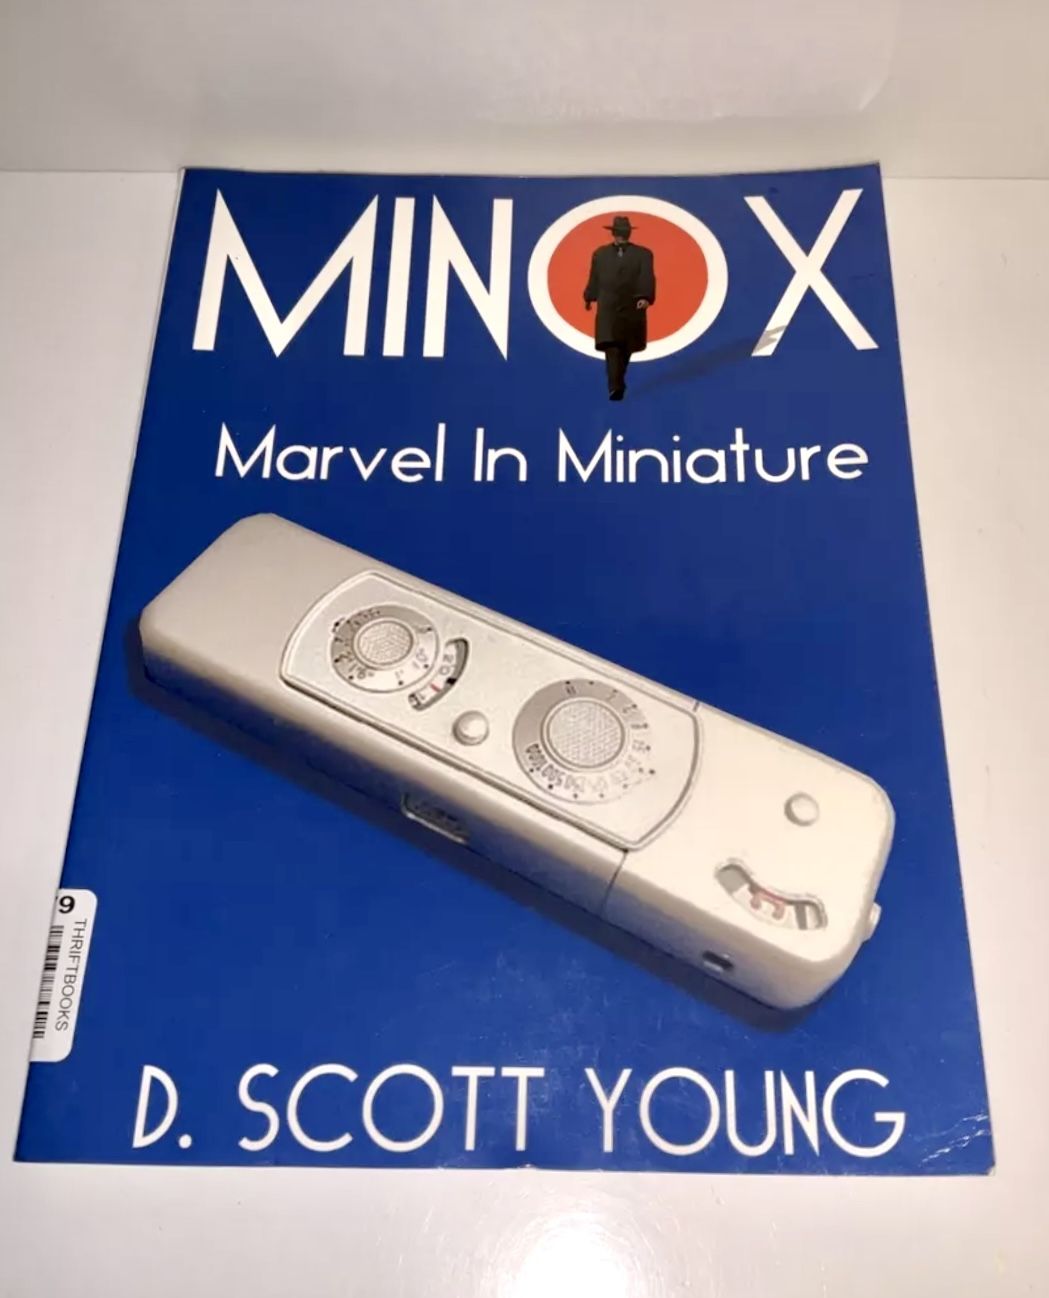 Minox: Marvel in Miniature D. Scott Young